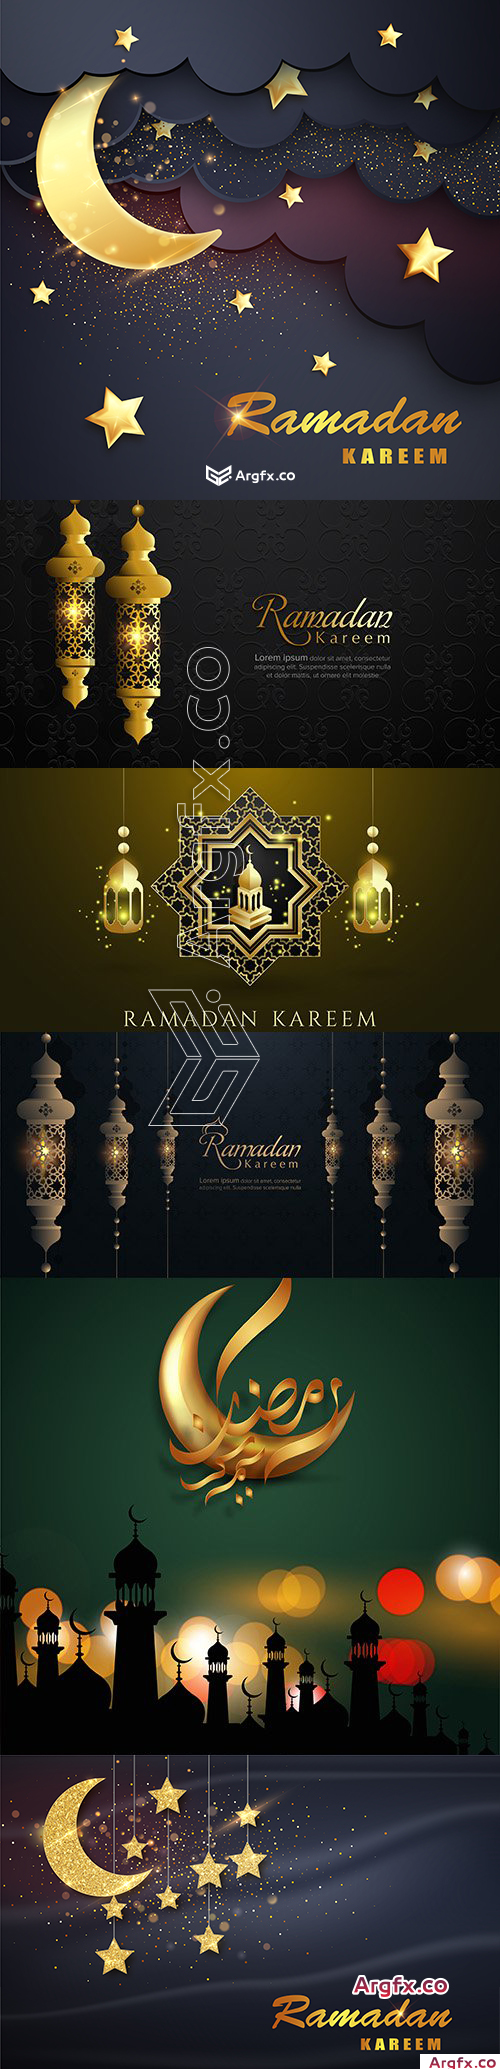 Ramadan Kareem moon and luxurious Islamic background elements